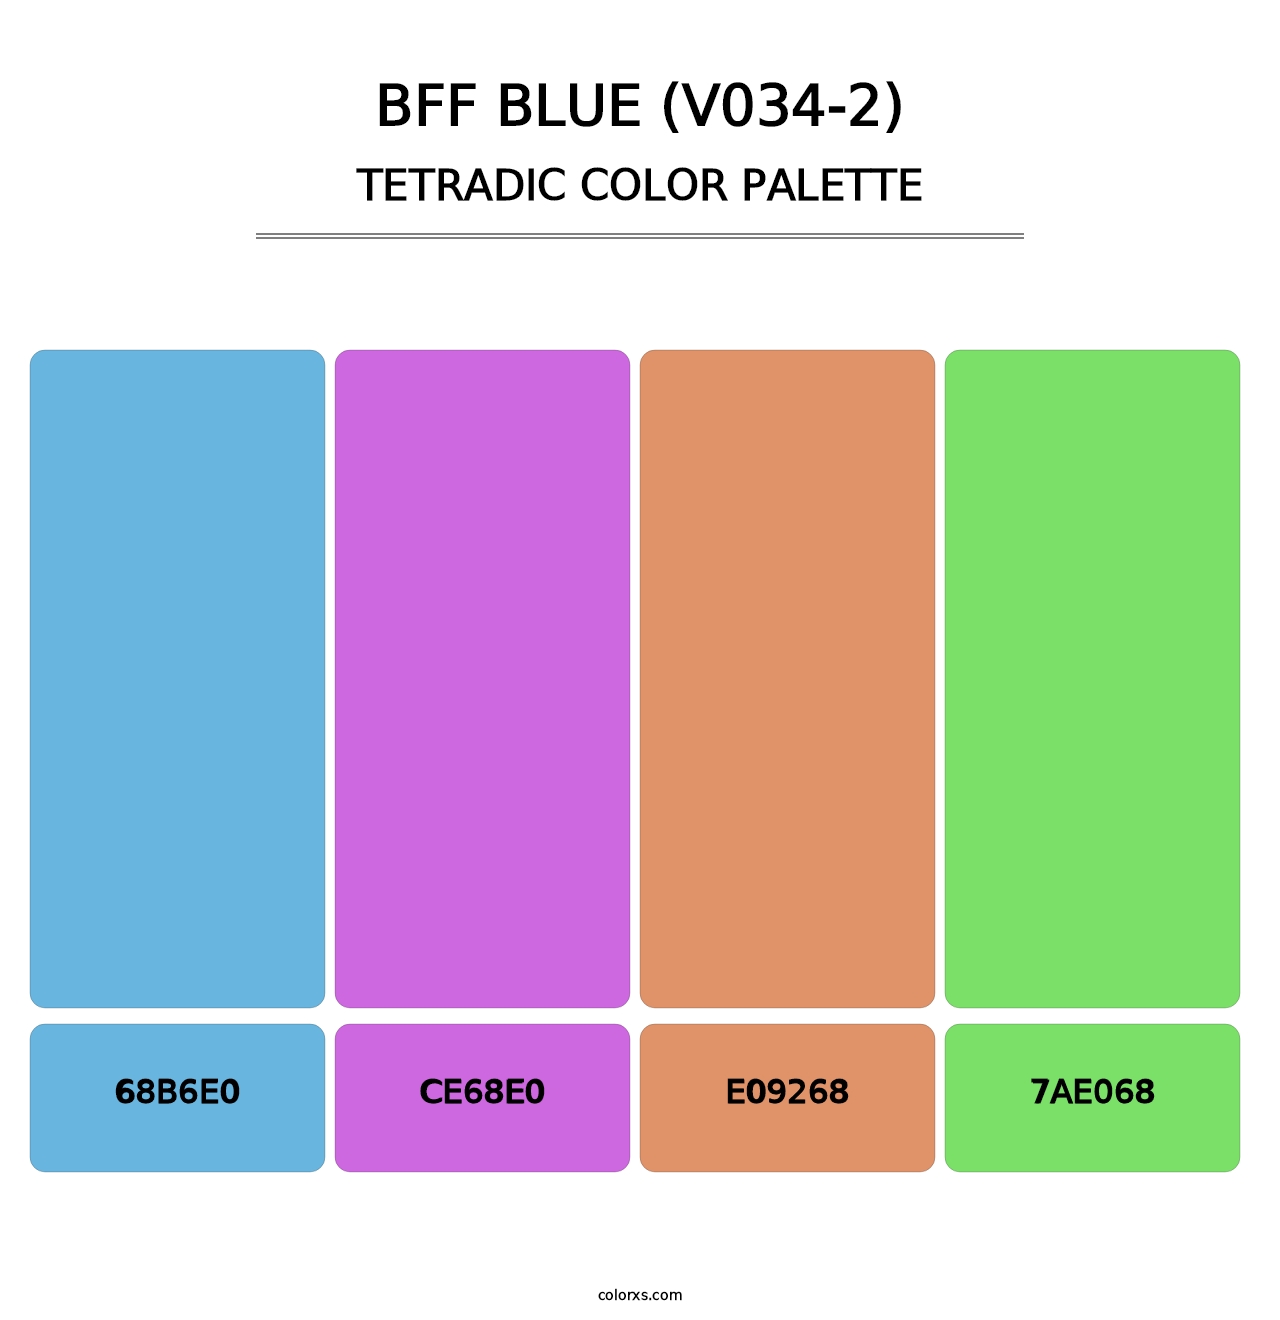 BFF Blue (V034-2) - Tetradic Color Palette